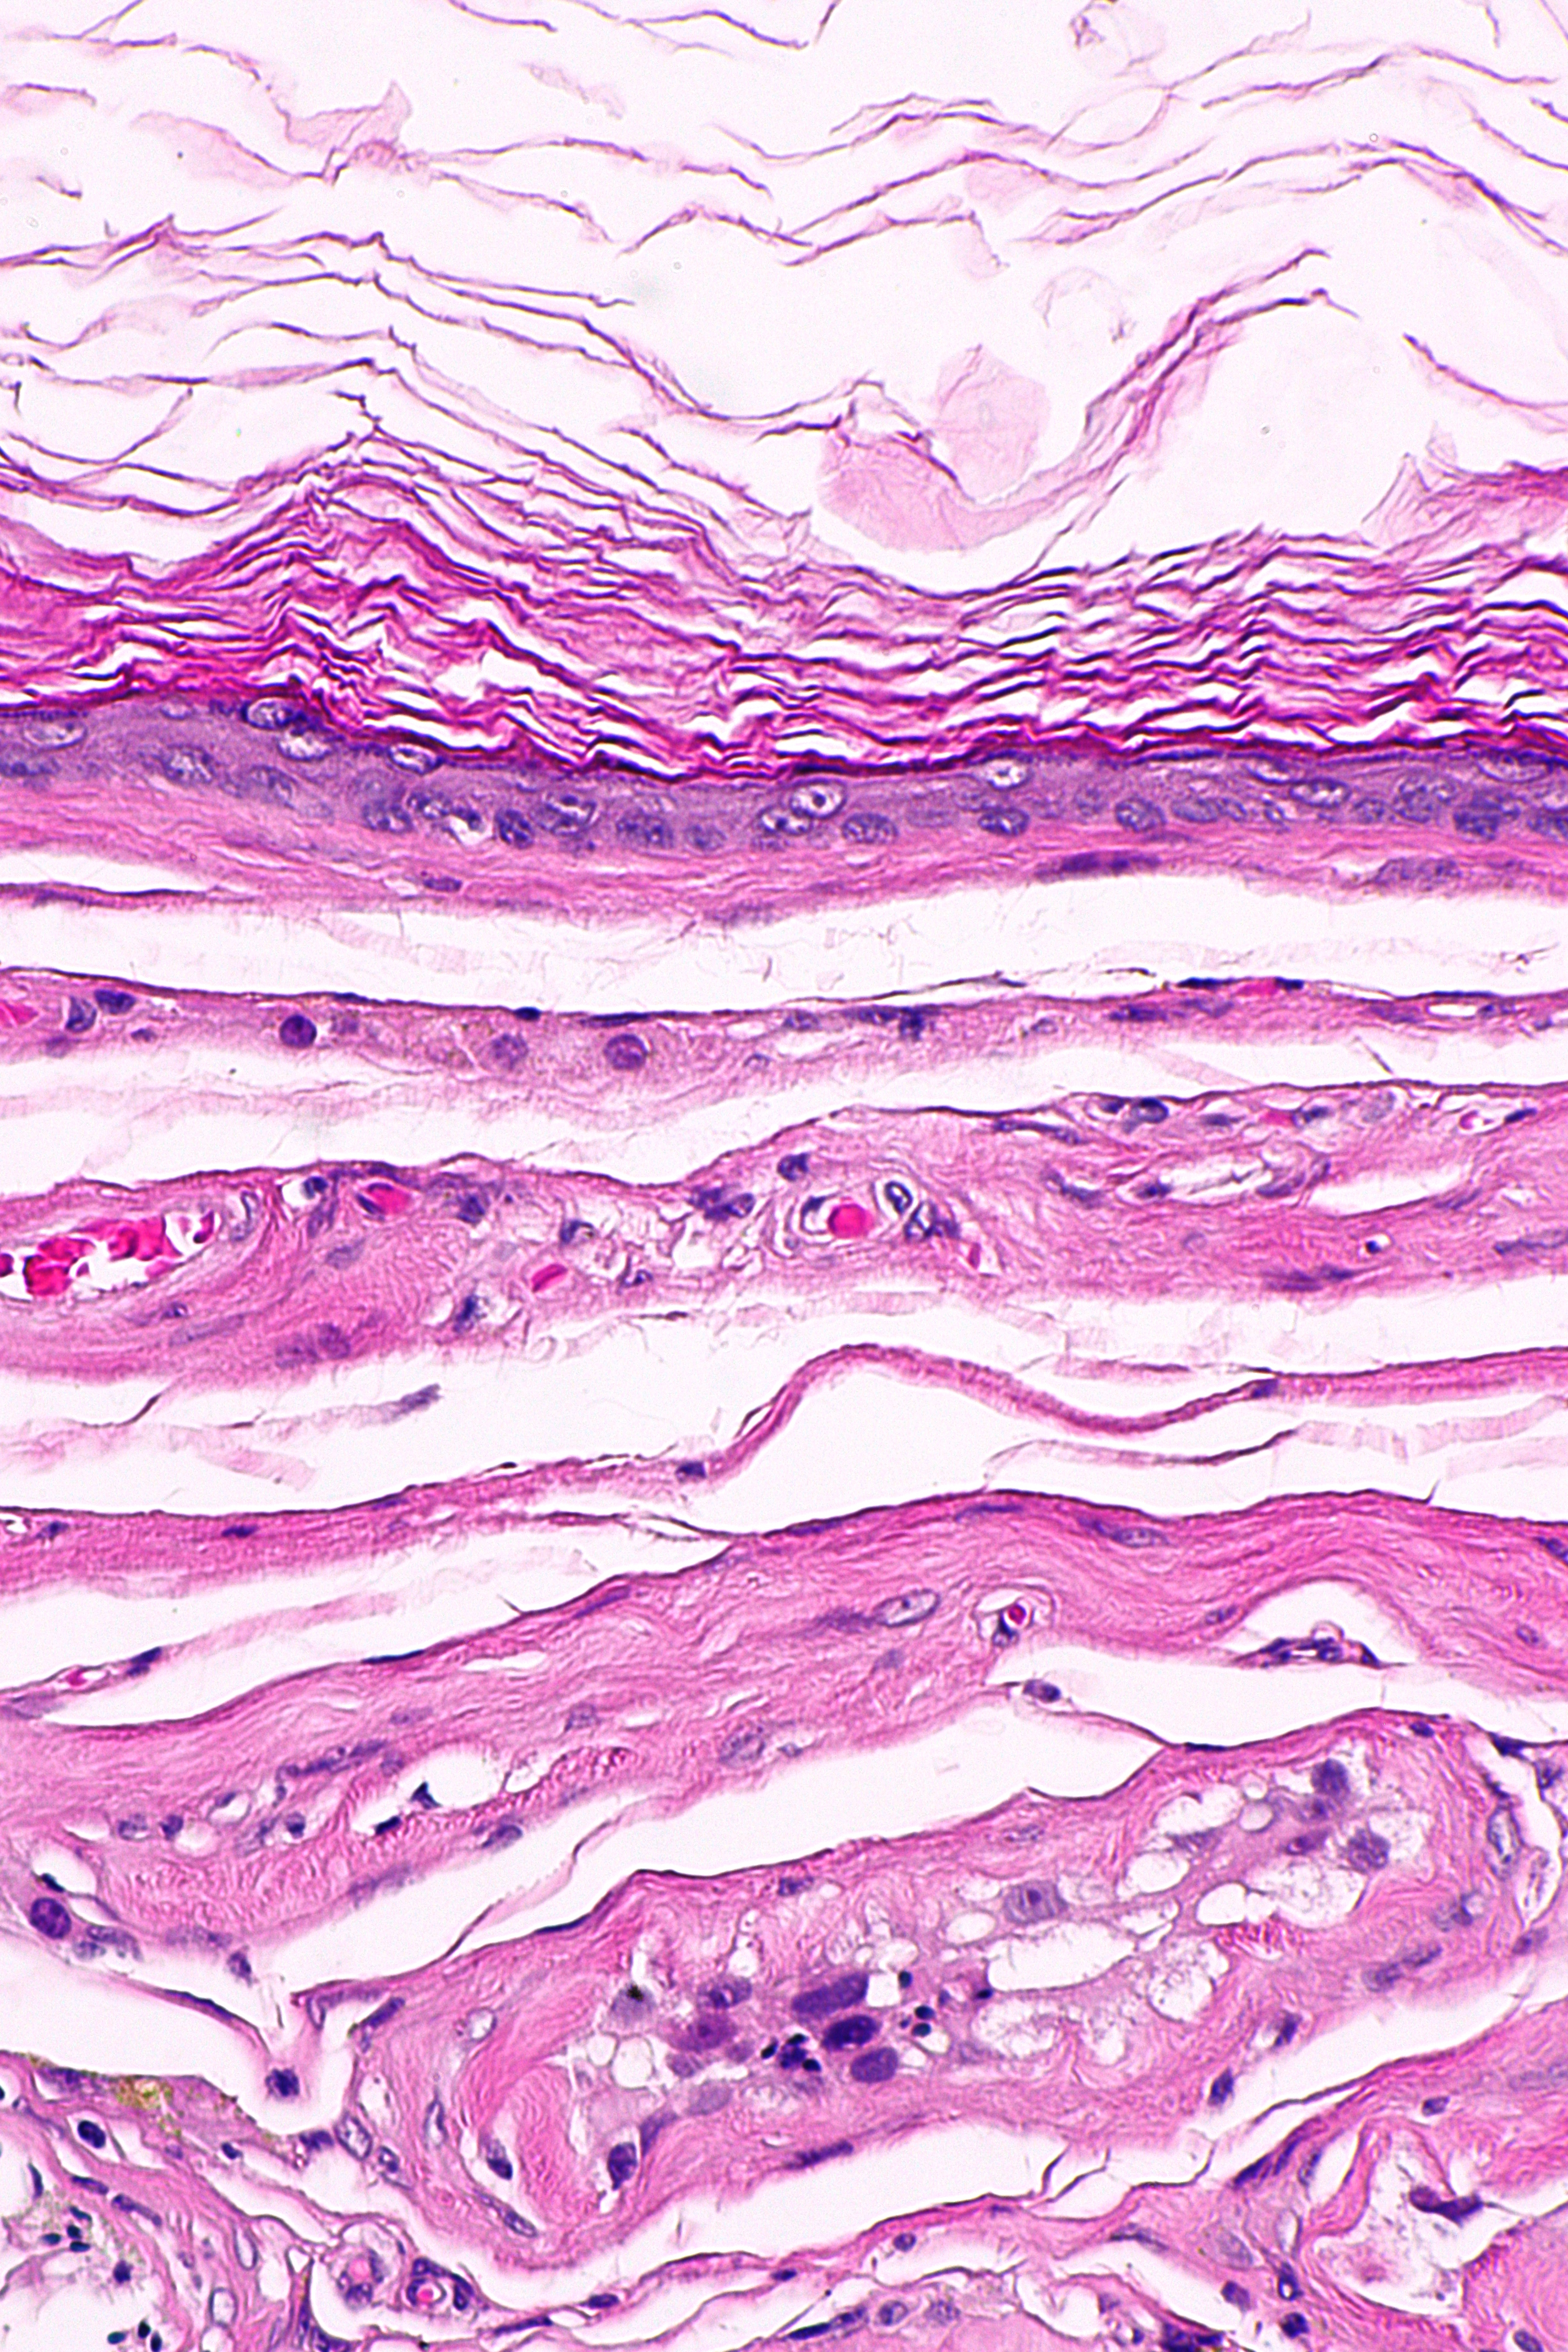 File:Epidermoid cyst of testis -- high mag.jpg